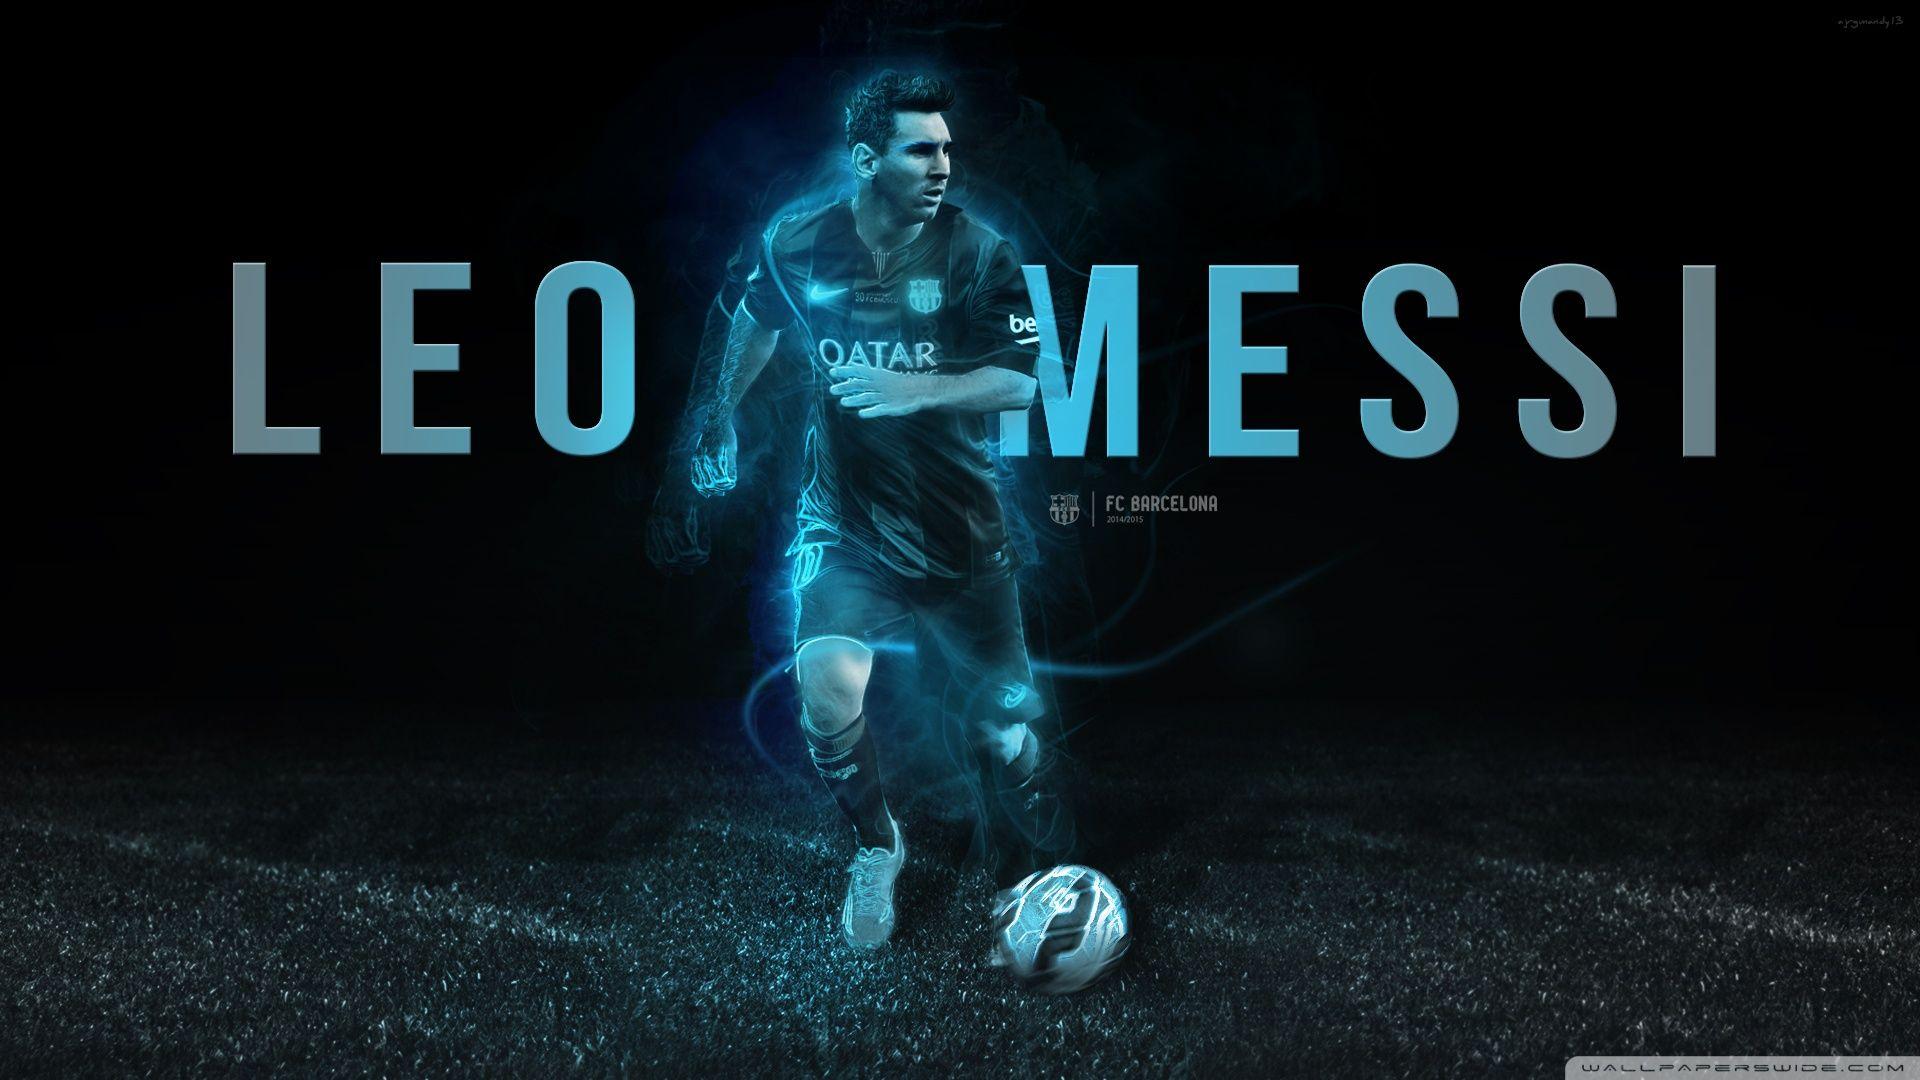 Best 20 Lionel Messi Hd Wallpapers